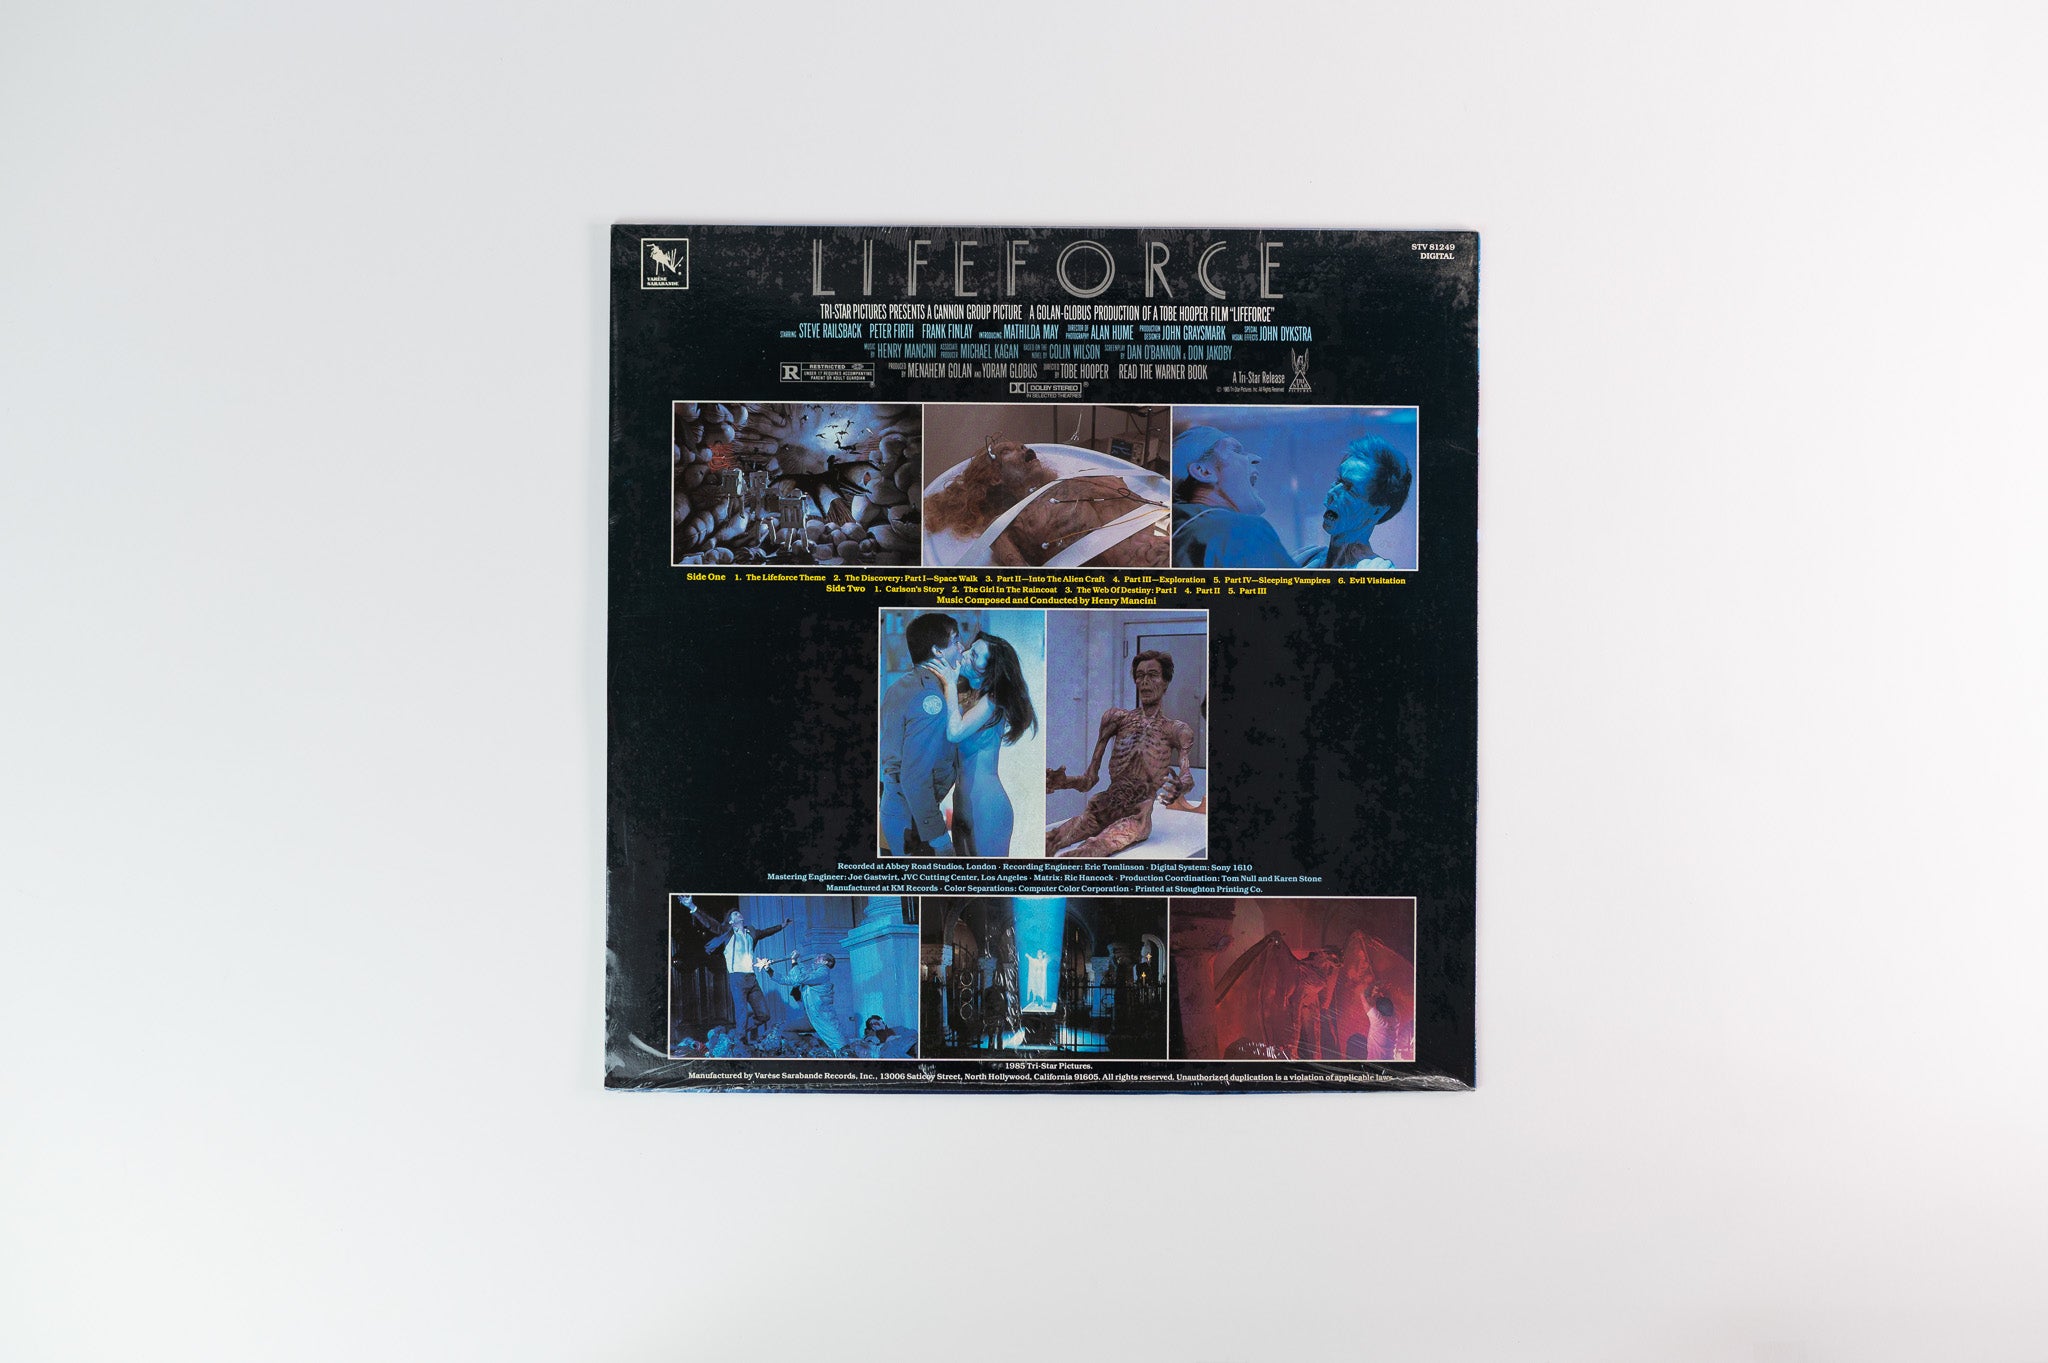 Henry Mancini - Lifeforce (Original Motion Picture Soundtrack) on Varese Sarabande - Sealed